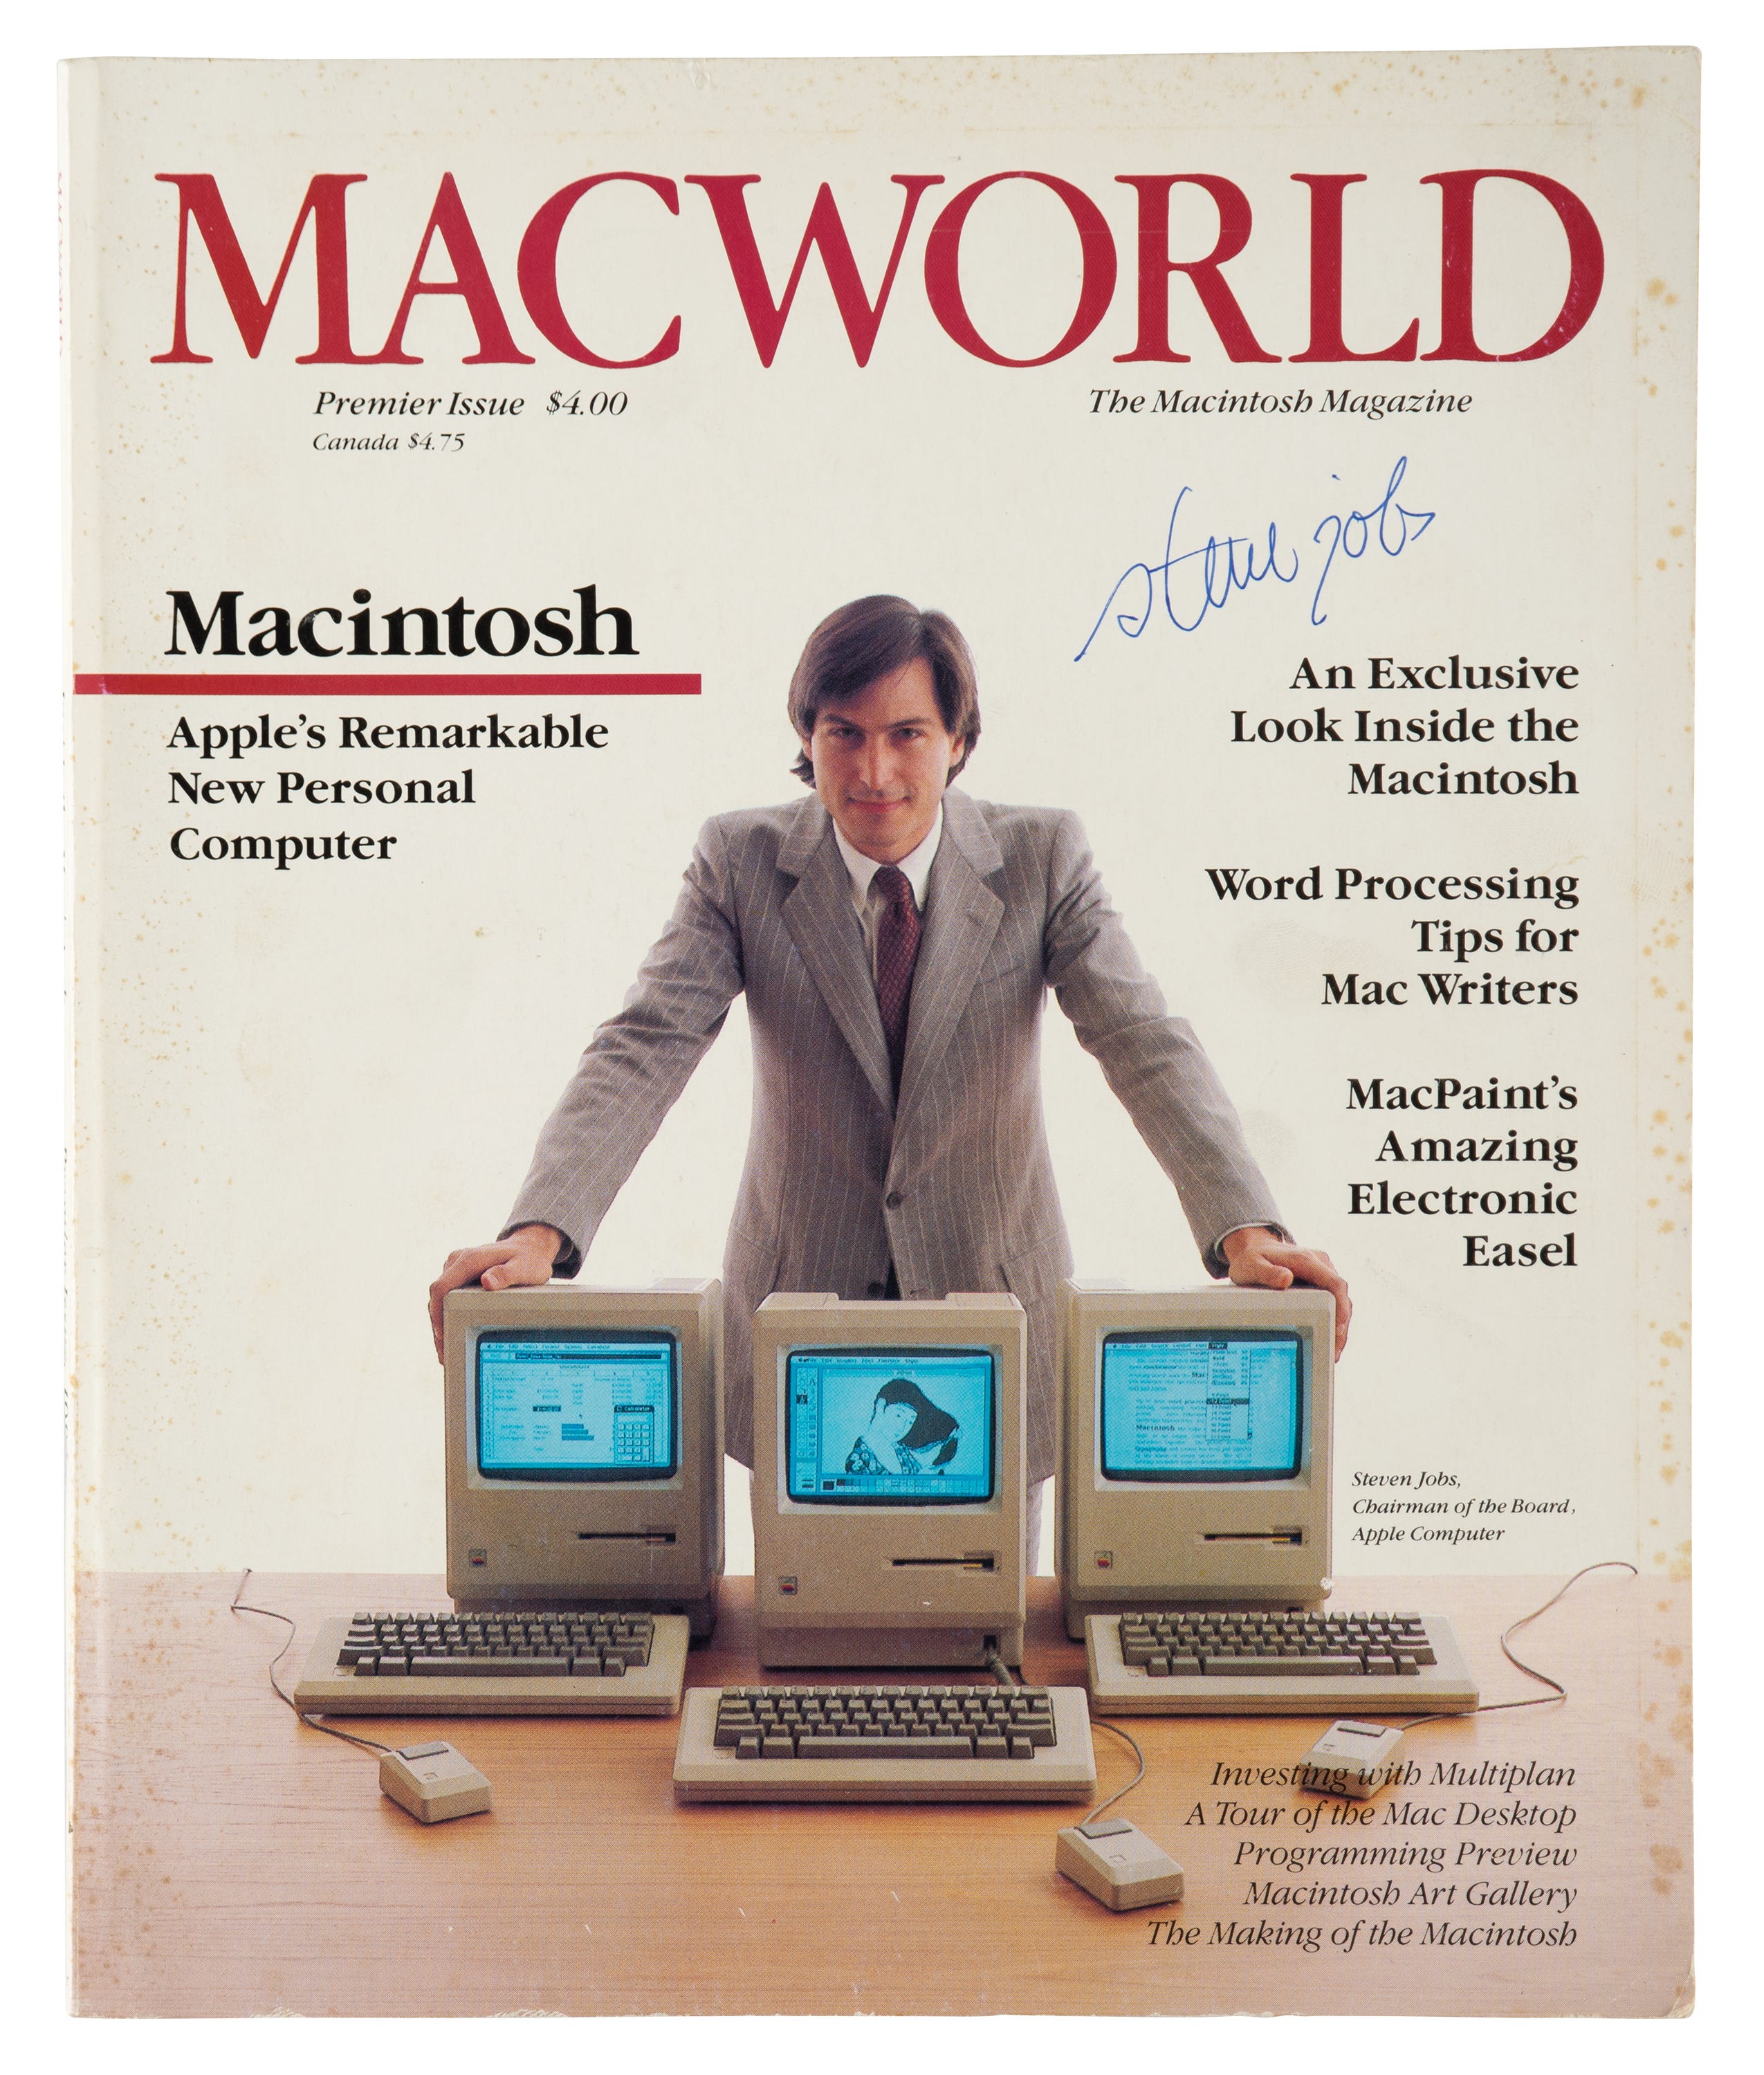 Steve Jobs' signiertes Exemplar des Magazins Macworld